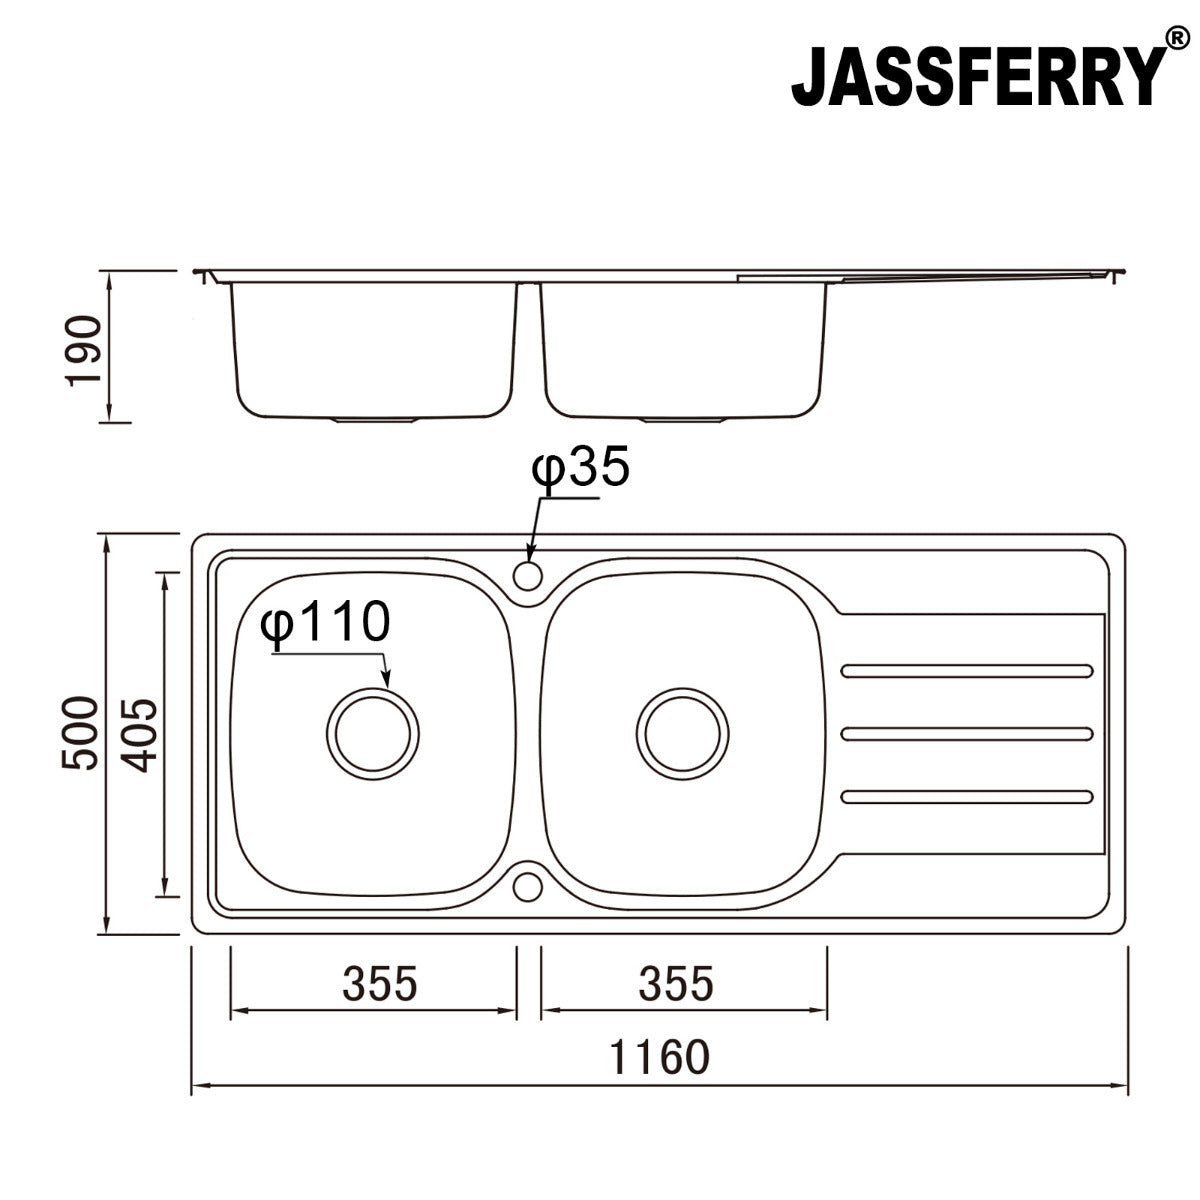 JassferryJASSFERRY Stainless Steel Kitchen Sink Inset Double Bowl Reversible DrainerKitchen Sinks